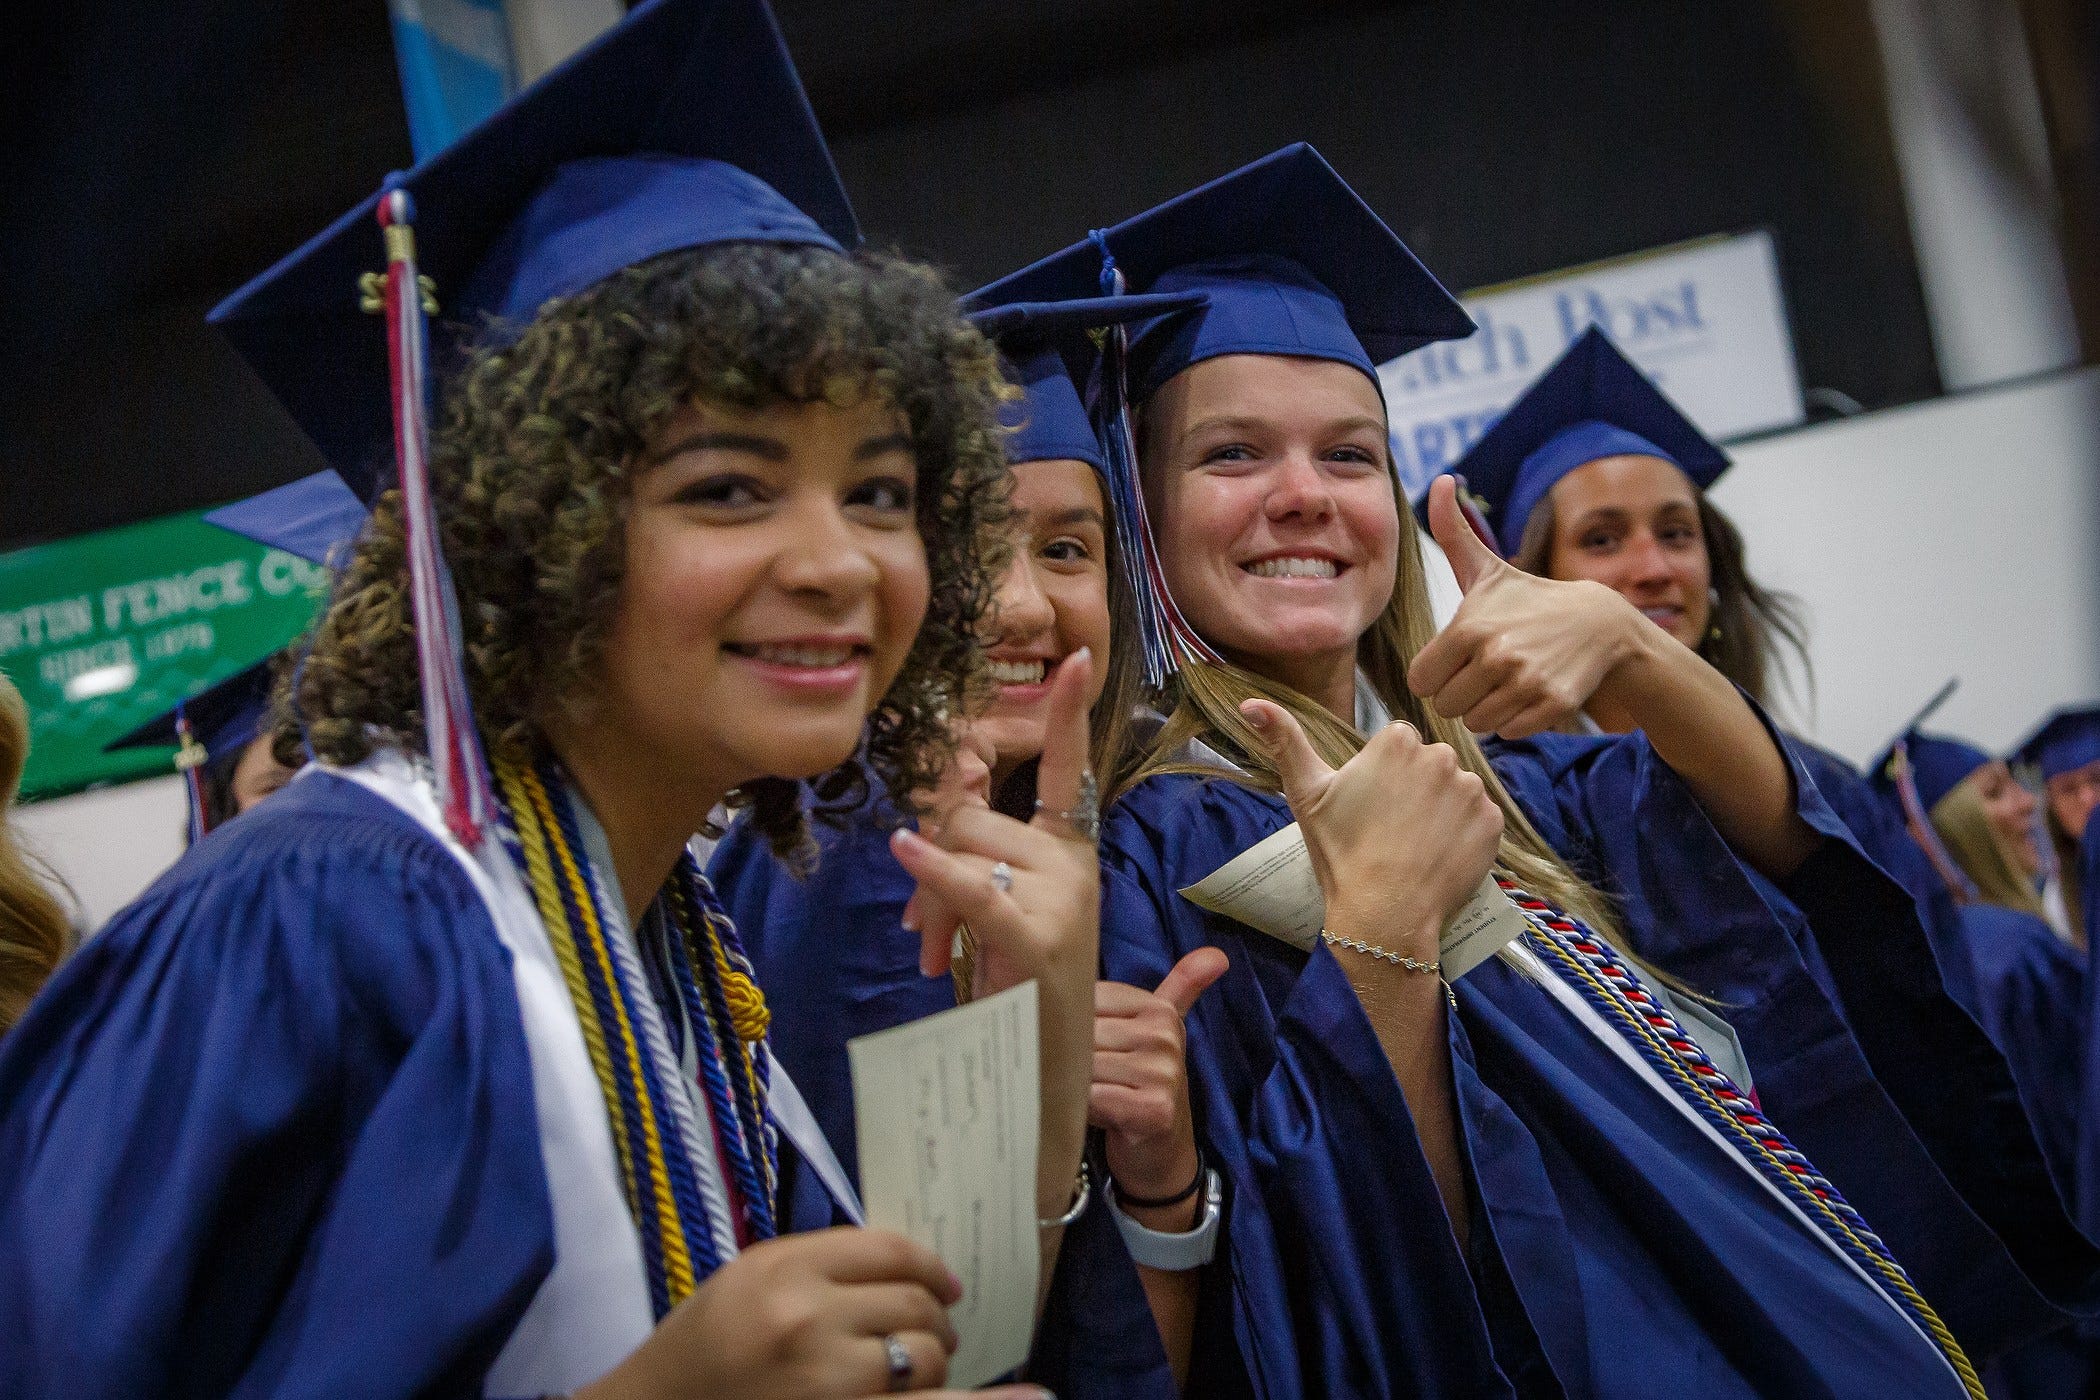 Class of 2022 William T. Dwyer High School graduation photos